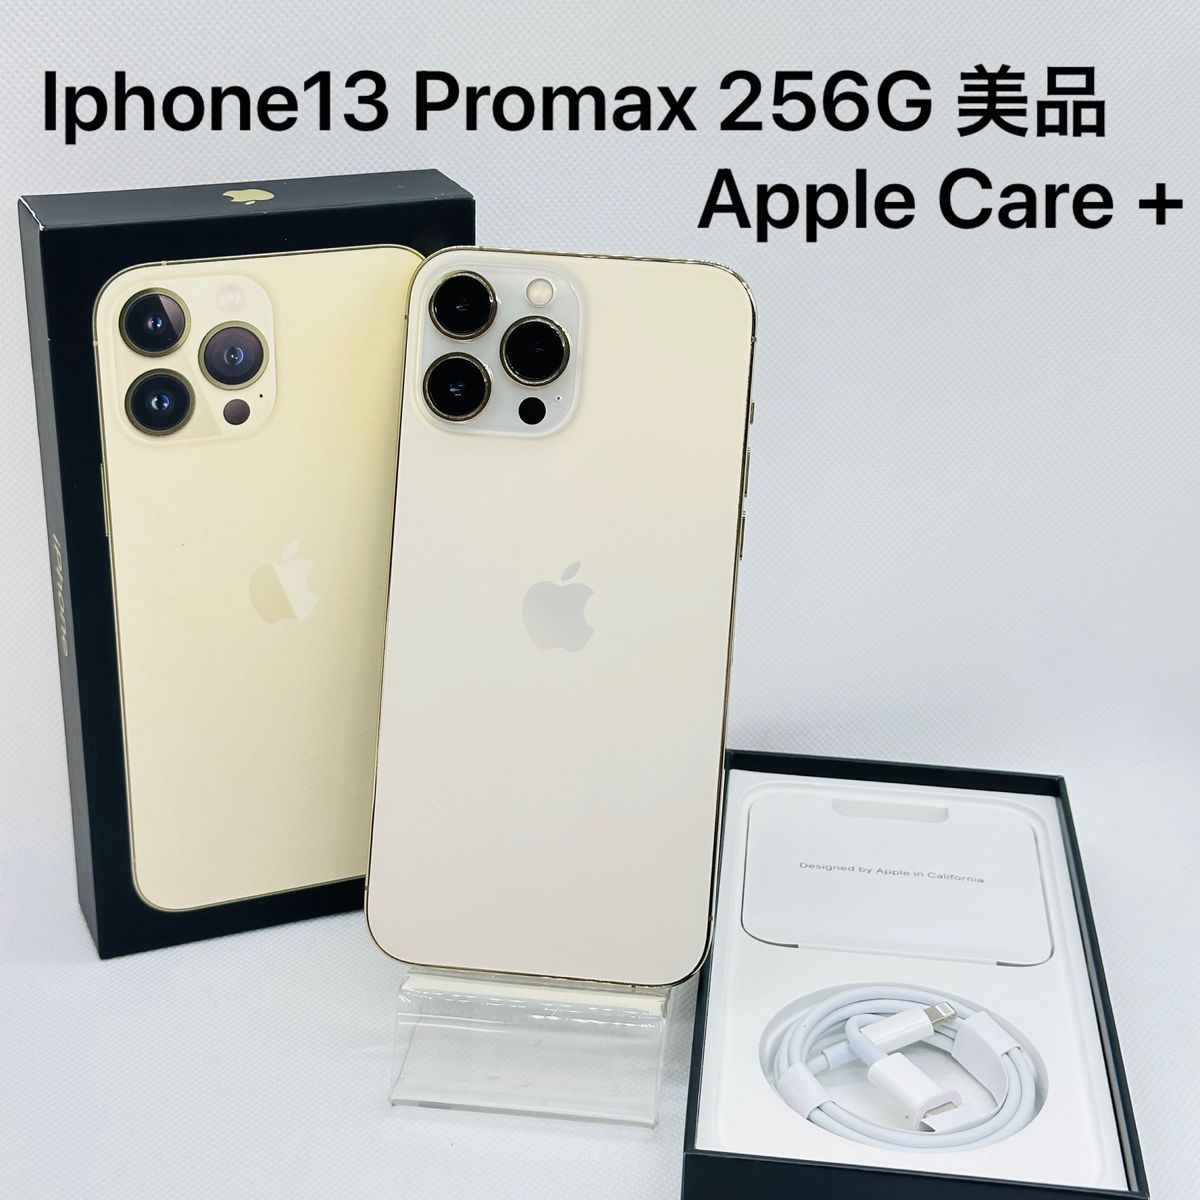 Apple Iphone 13 Promax 256GB SIM フリーバッテリー100% 美品 Apple